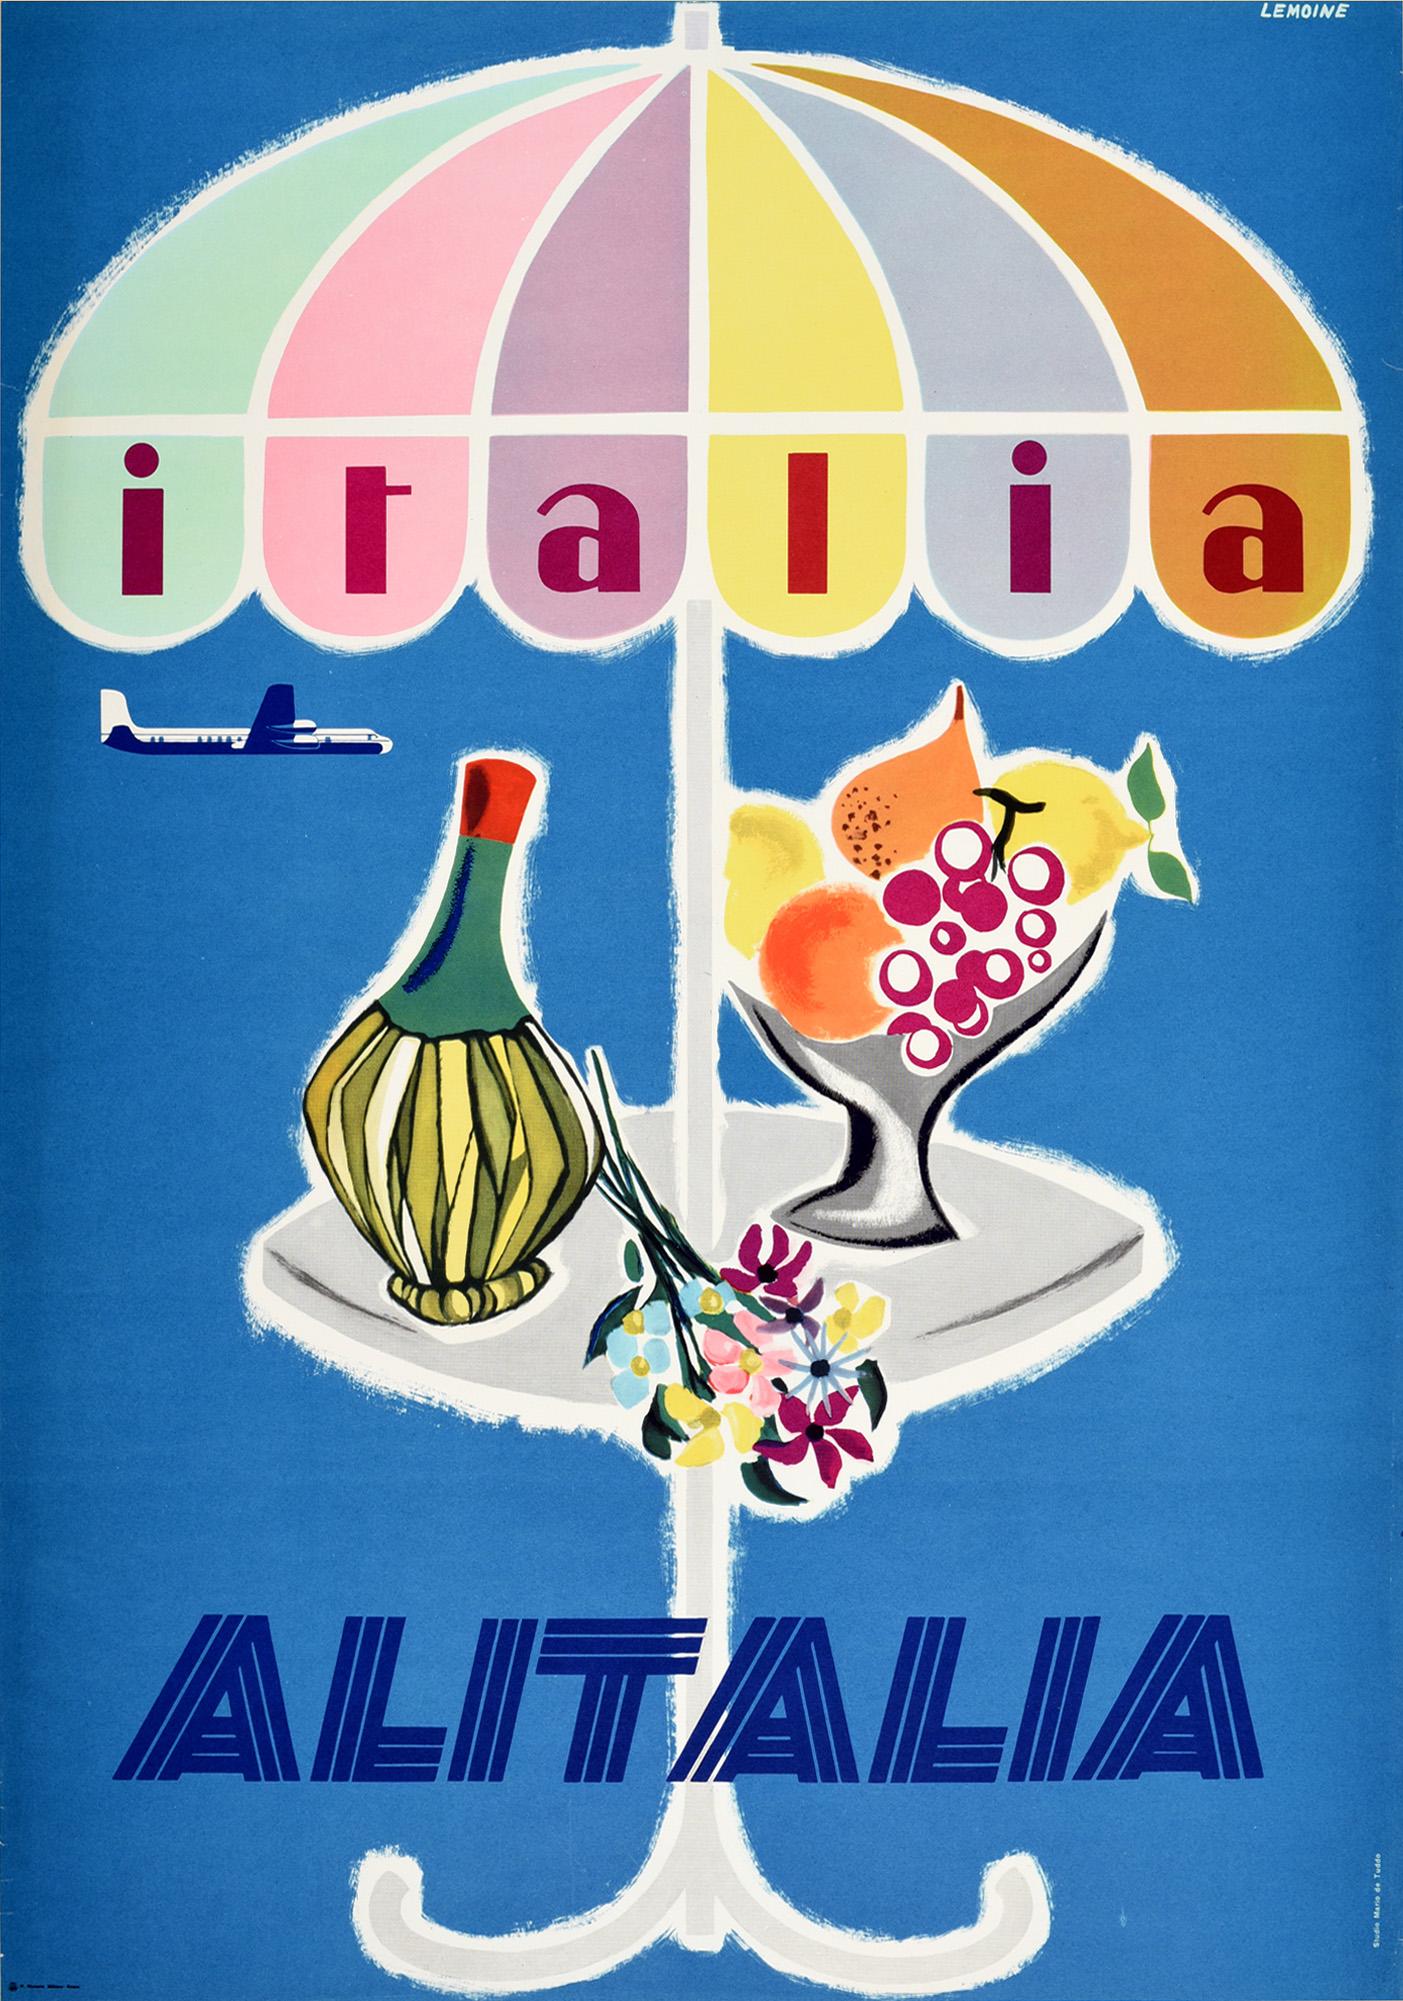 Lemoine Print - Original Vintage Poster Italia Italy Alitalia Airline Travel Wine Fruit Flowers